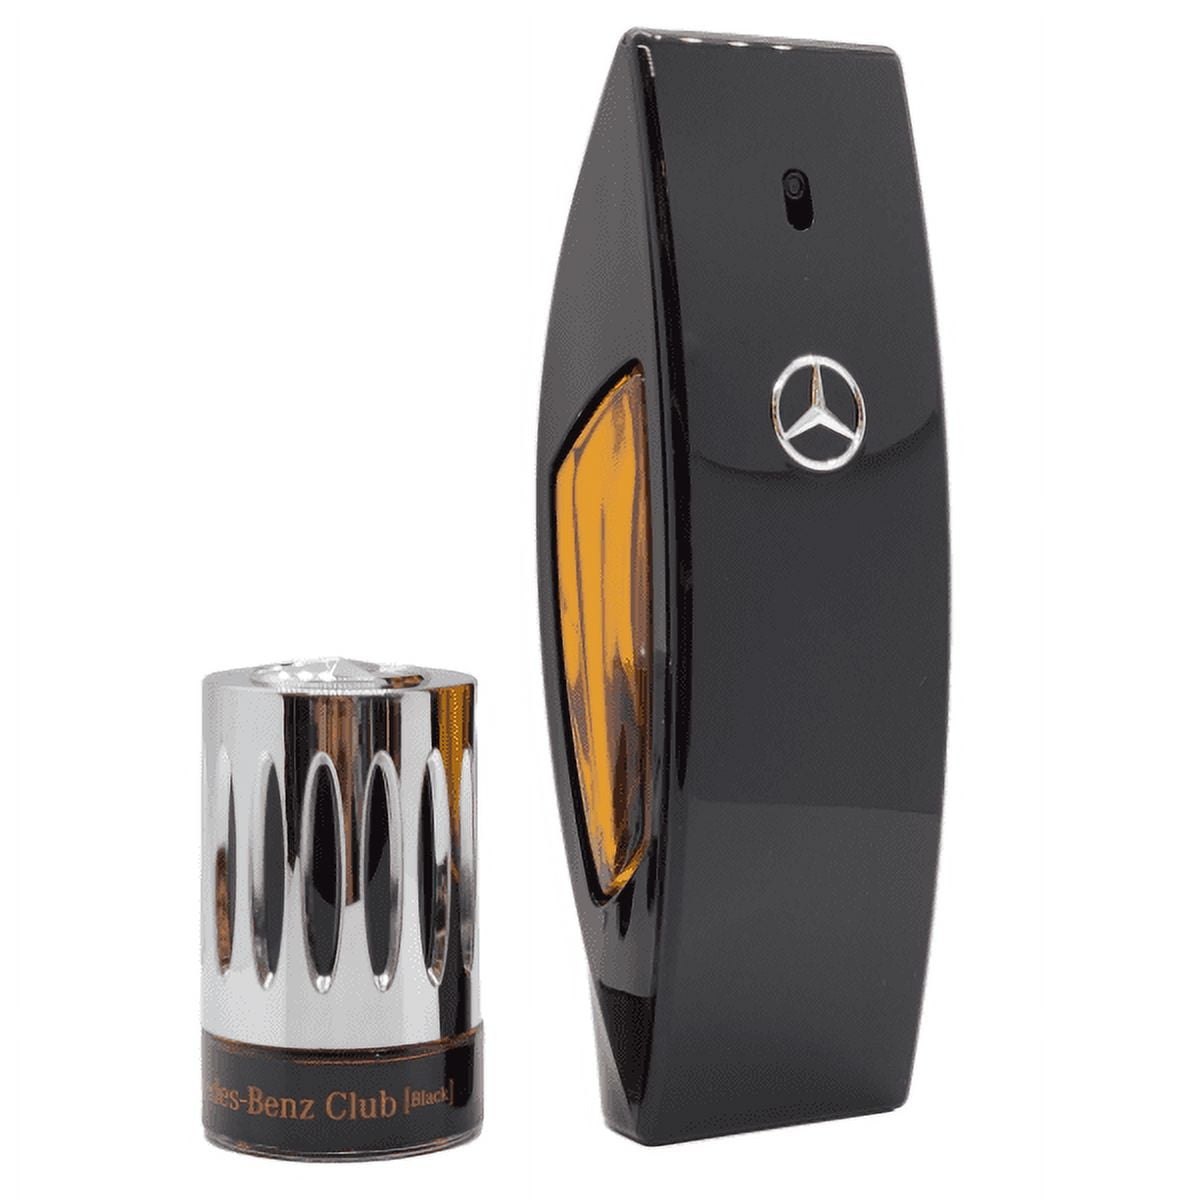 Mercedes Benz Club Black 3.4 oz Eau De Toilette and 20 ml Mini